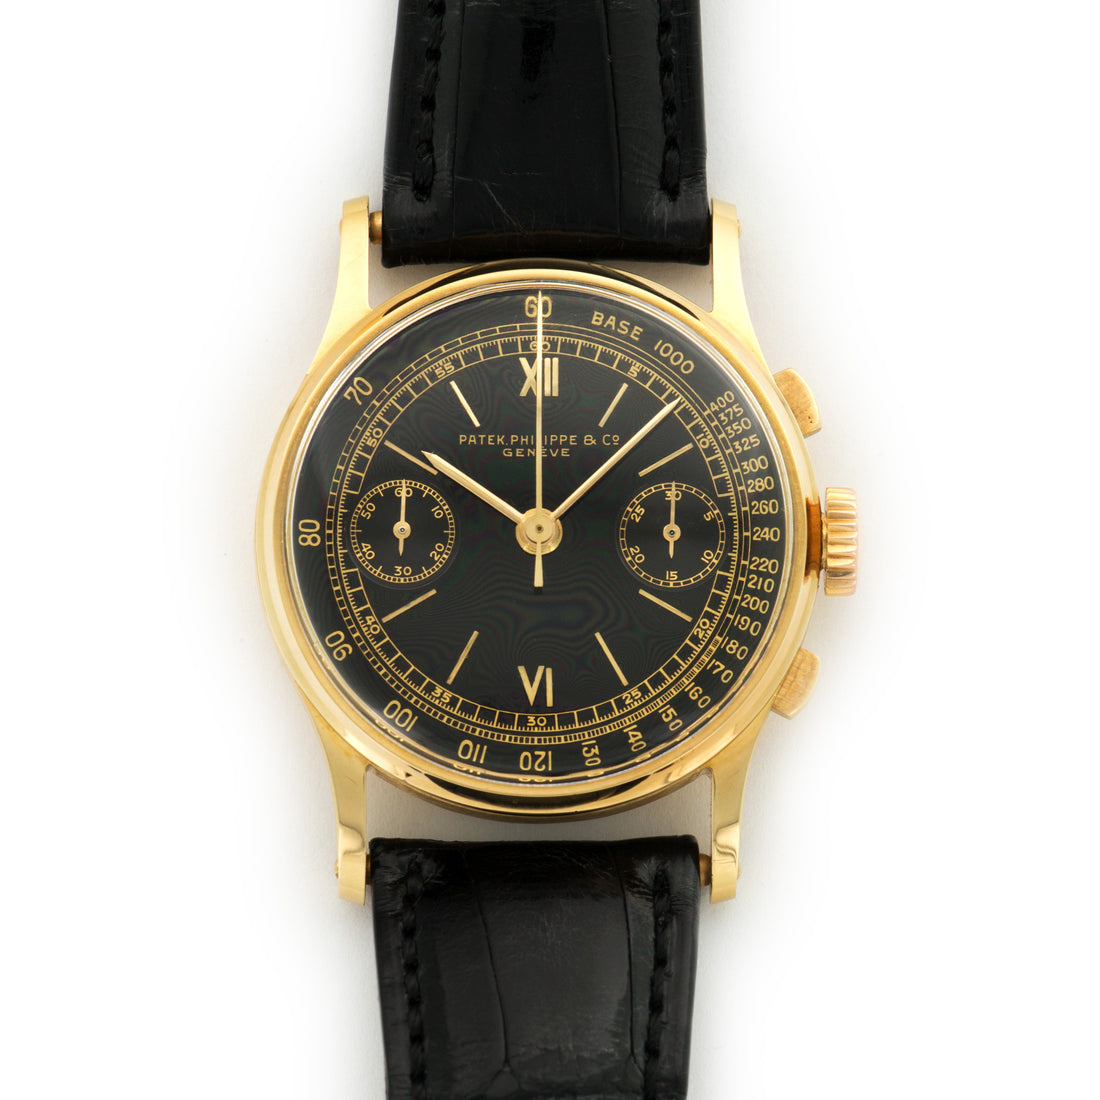 Patek Philippe Yellow Gold Chronograph Watch Ref. 130